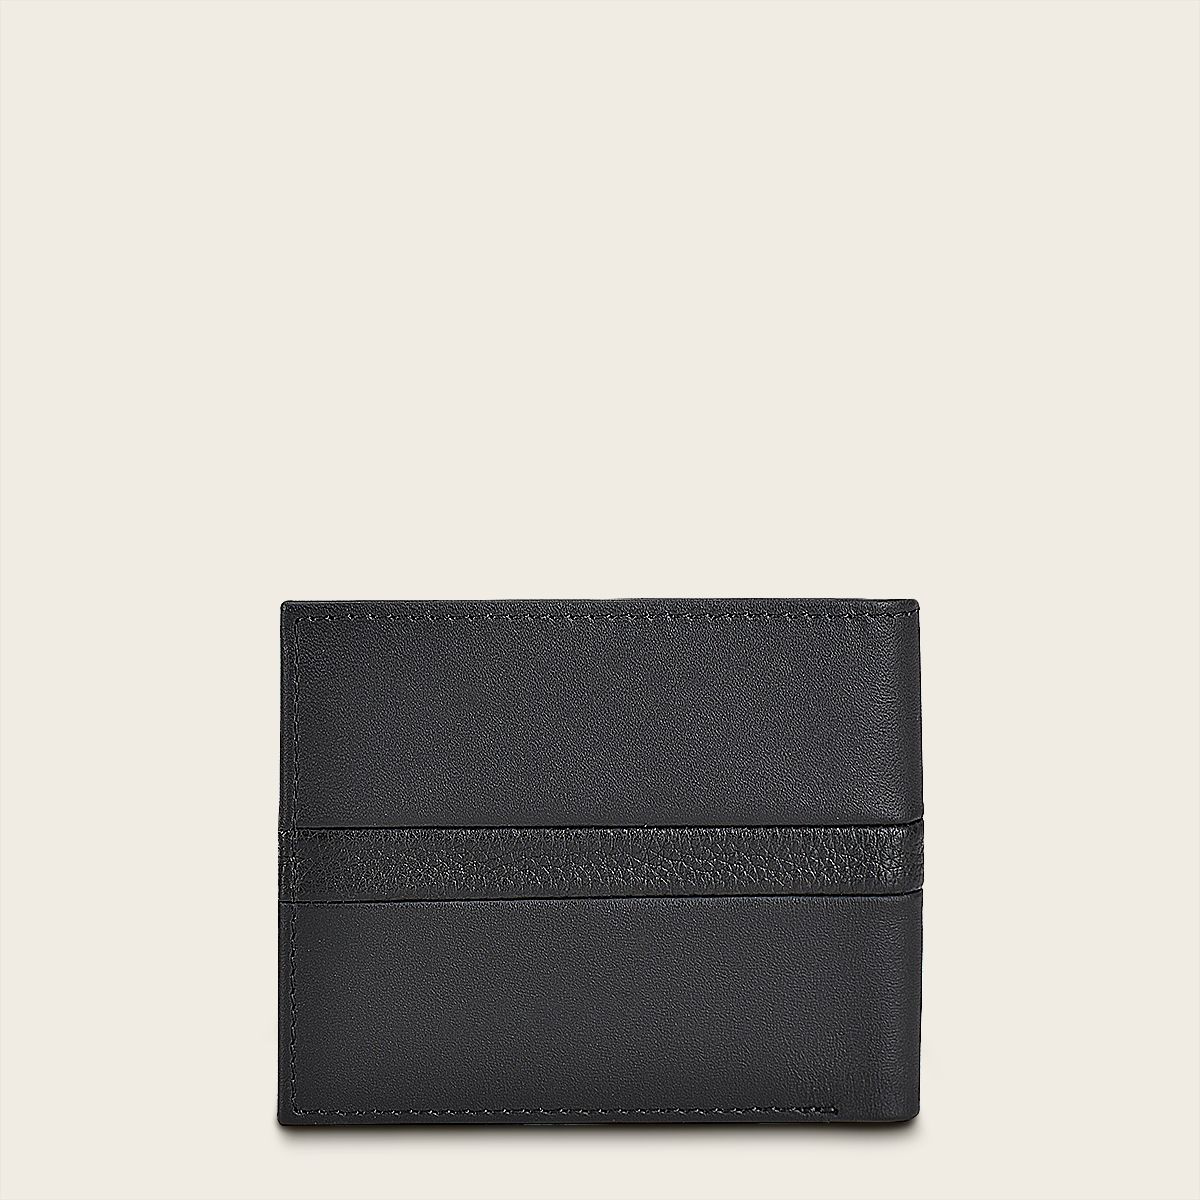 Men's Cubic Crocodile Leather Wallet in Brown/Black - Arcane Fox Shades of Blue/Black-#424156